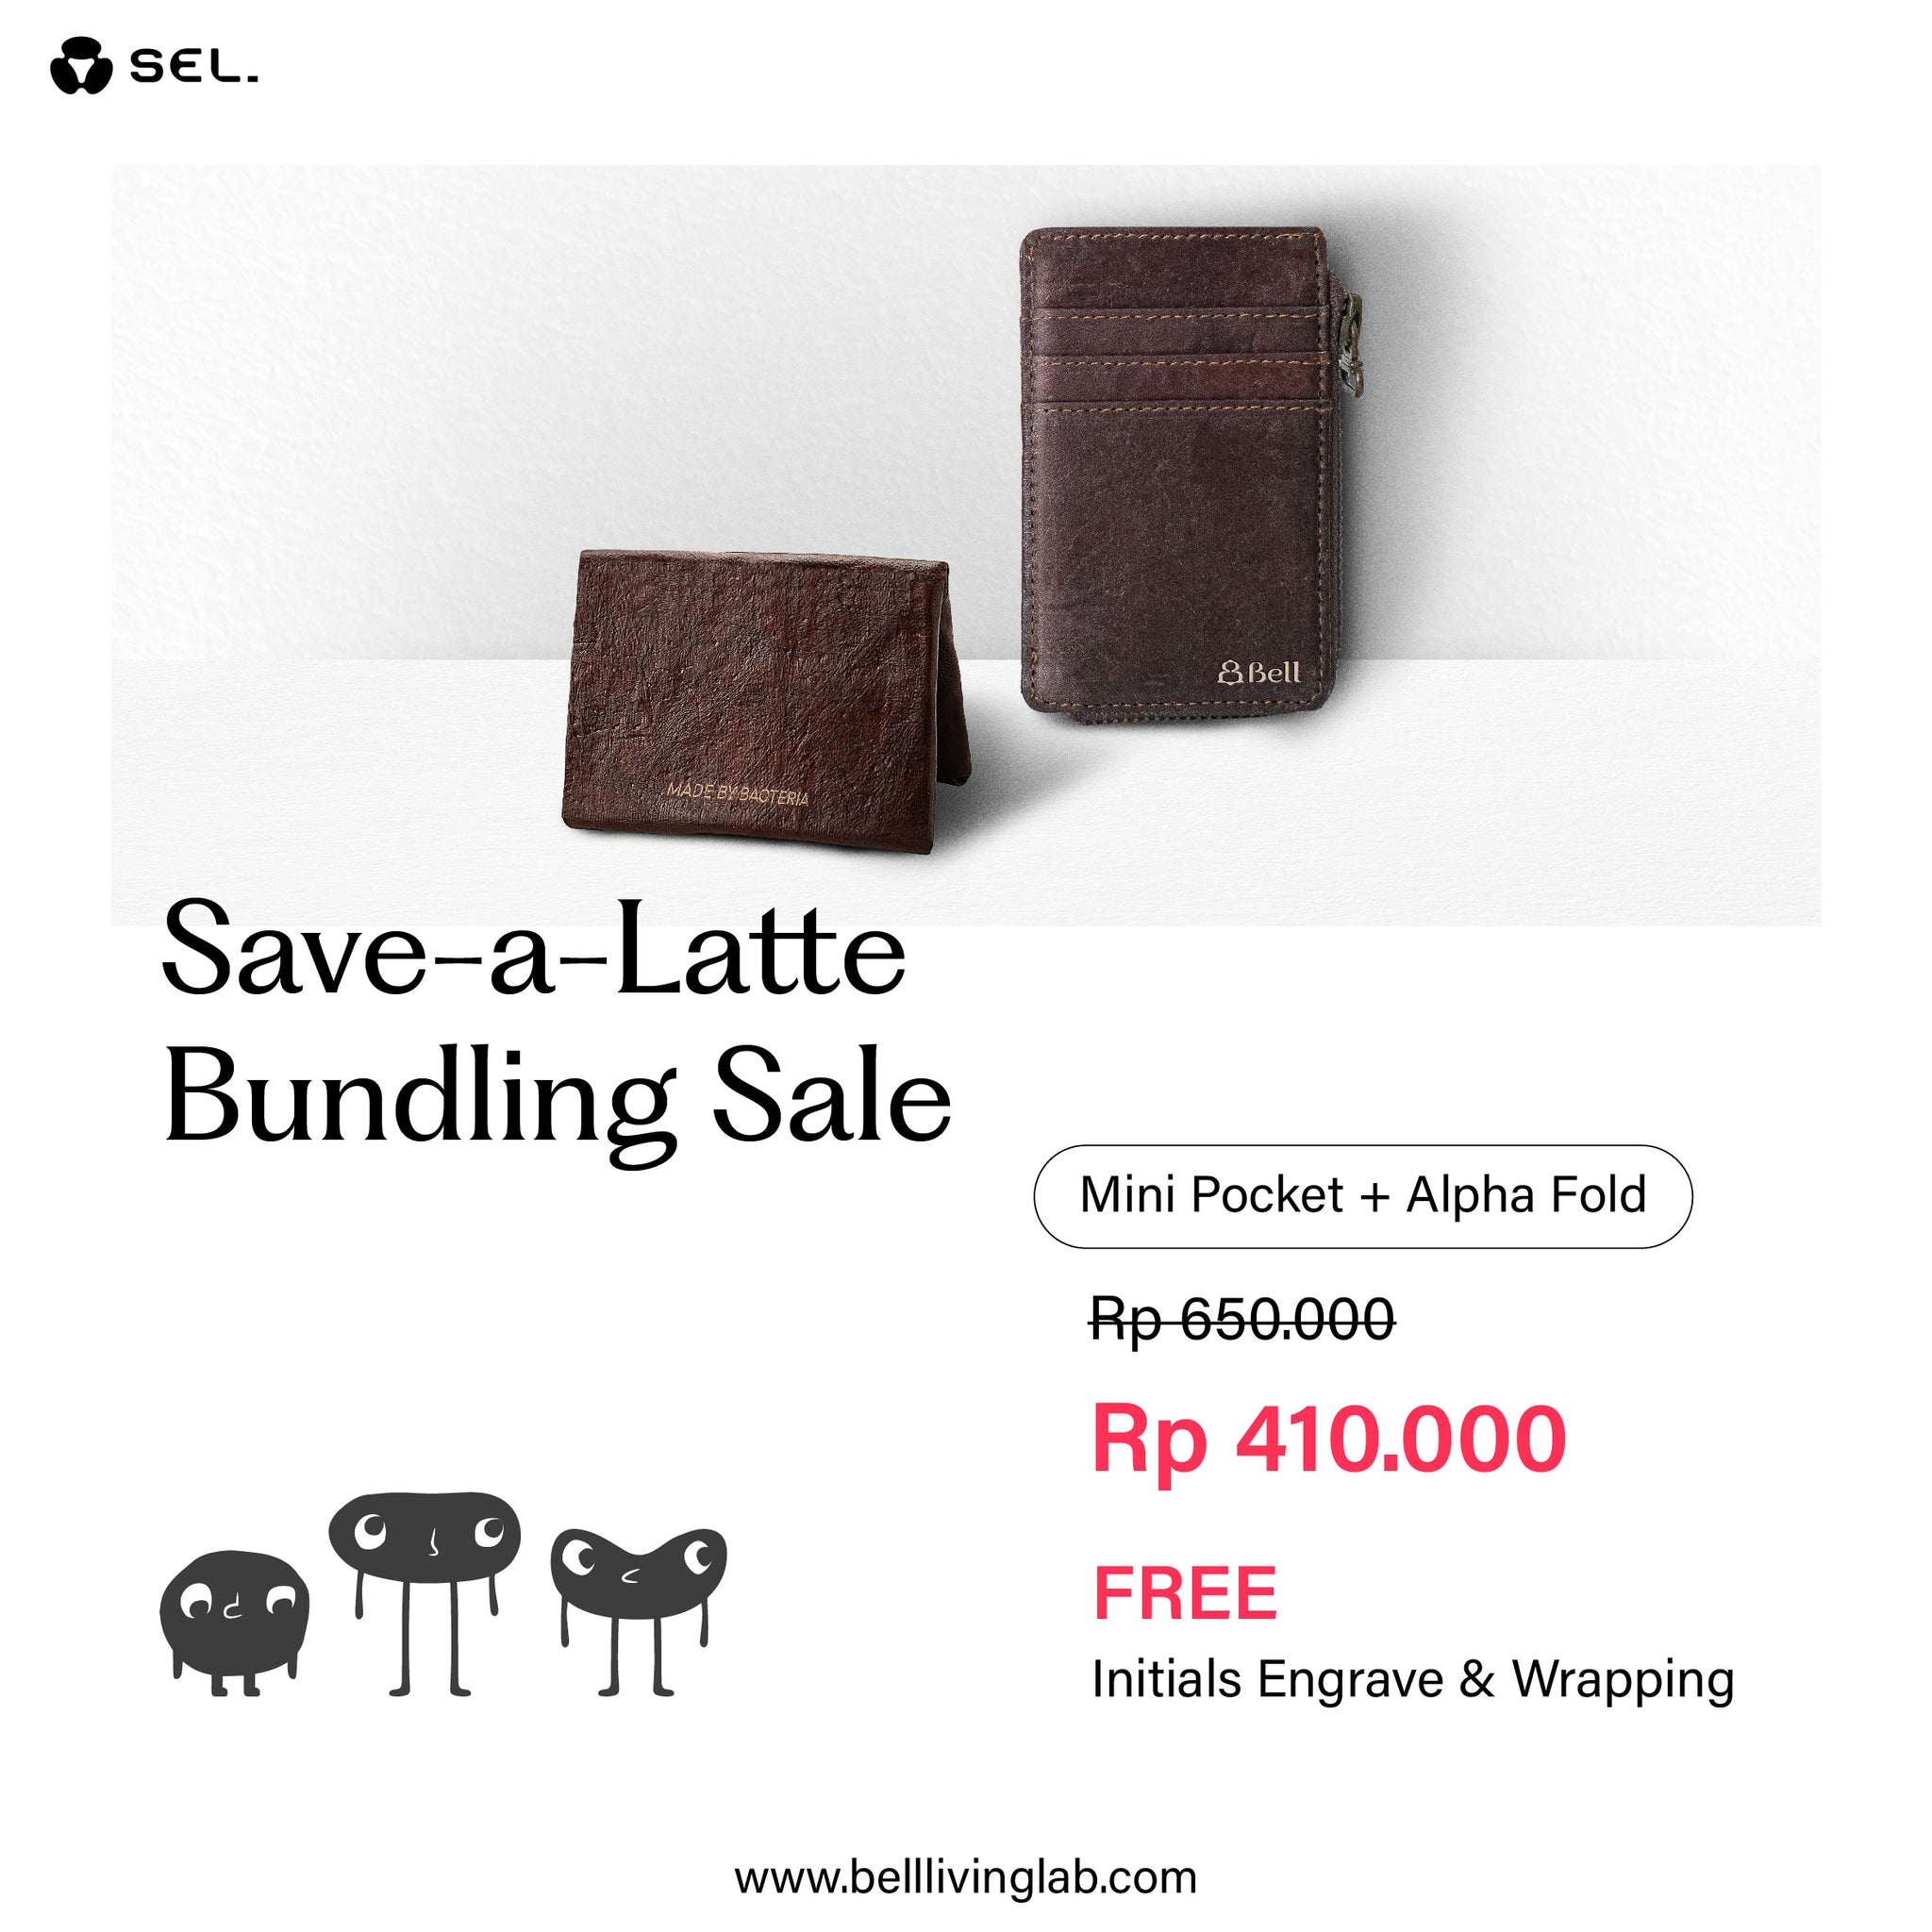 Save-a-Latte Bundling Sale Mini Pocket + Alpha Fold